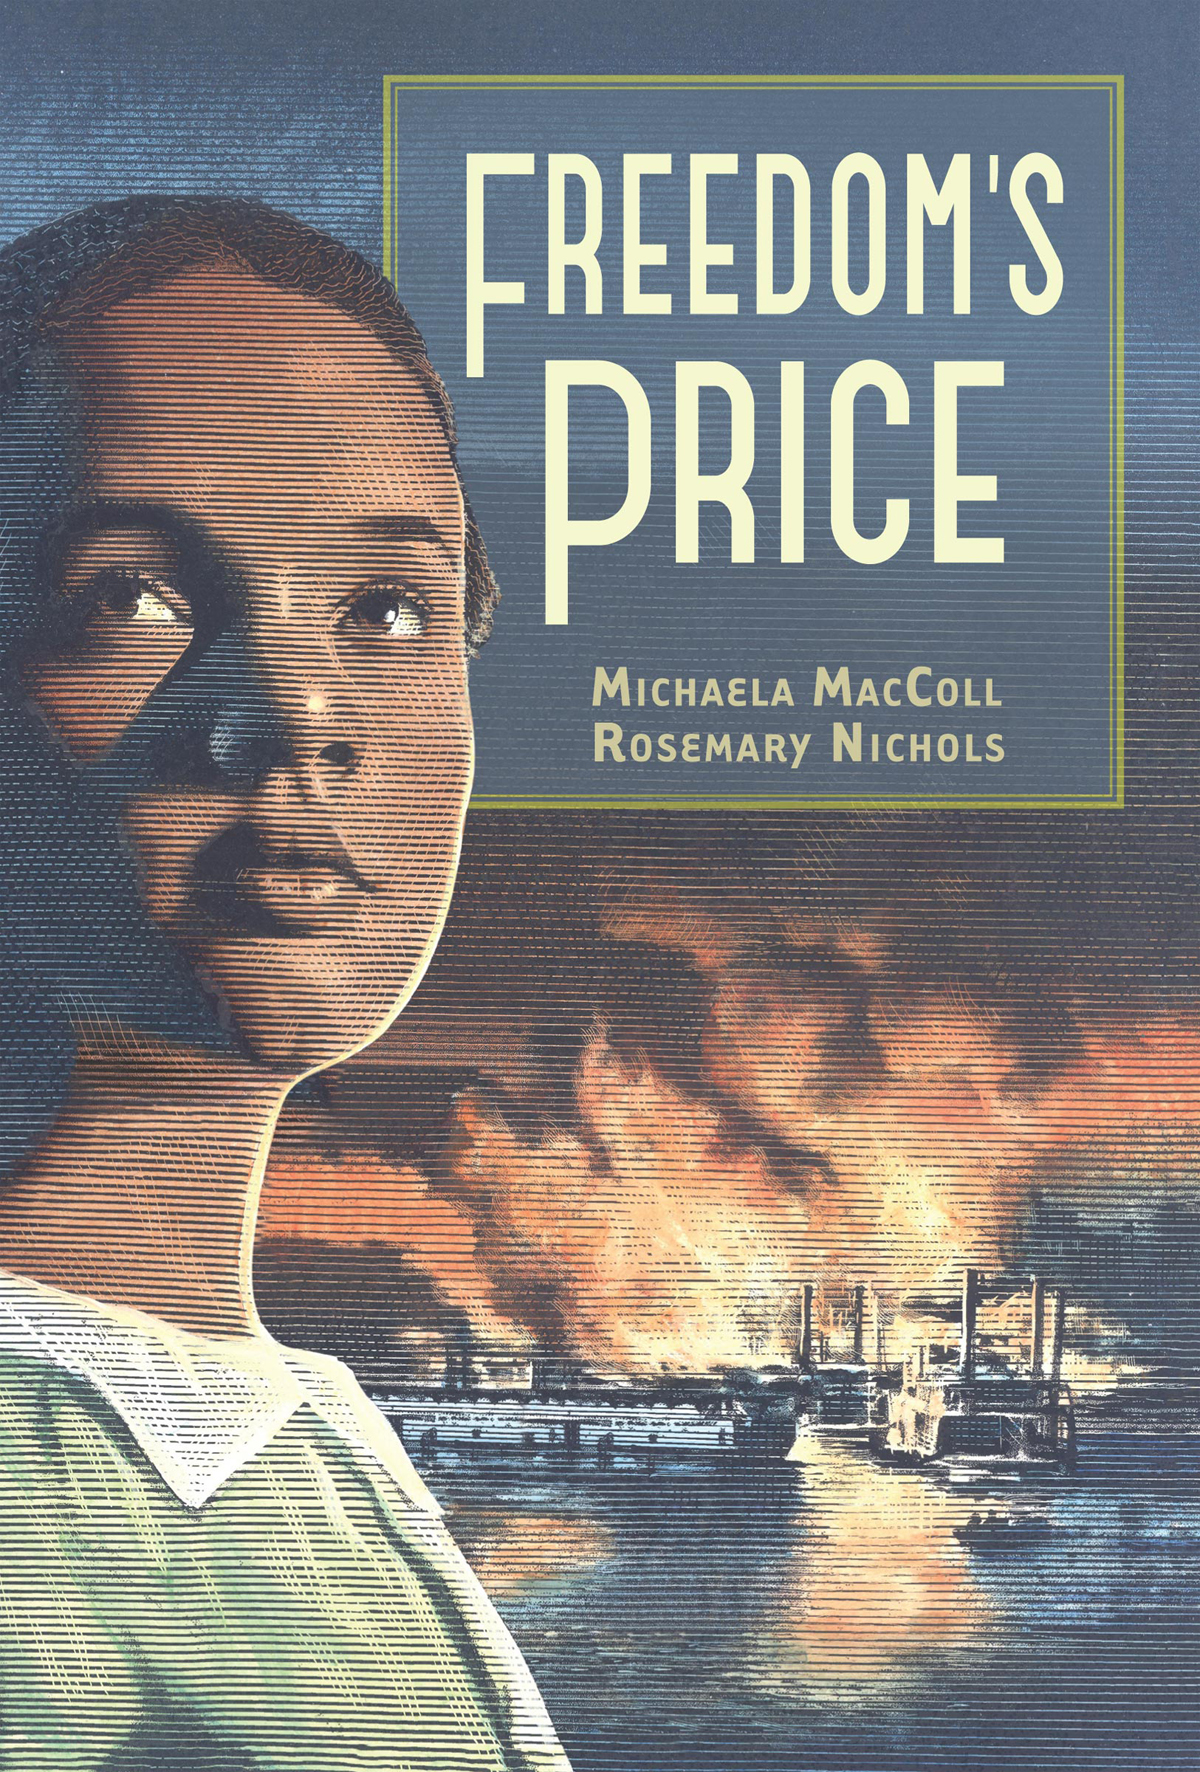 Freedom's Price by Michaela MacColl